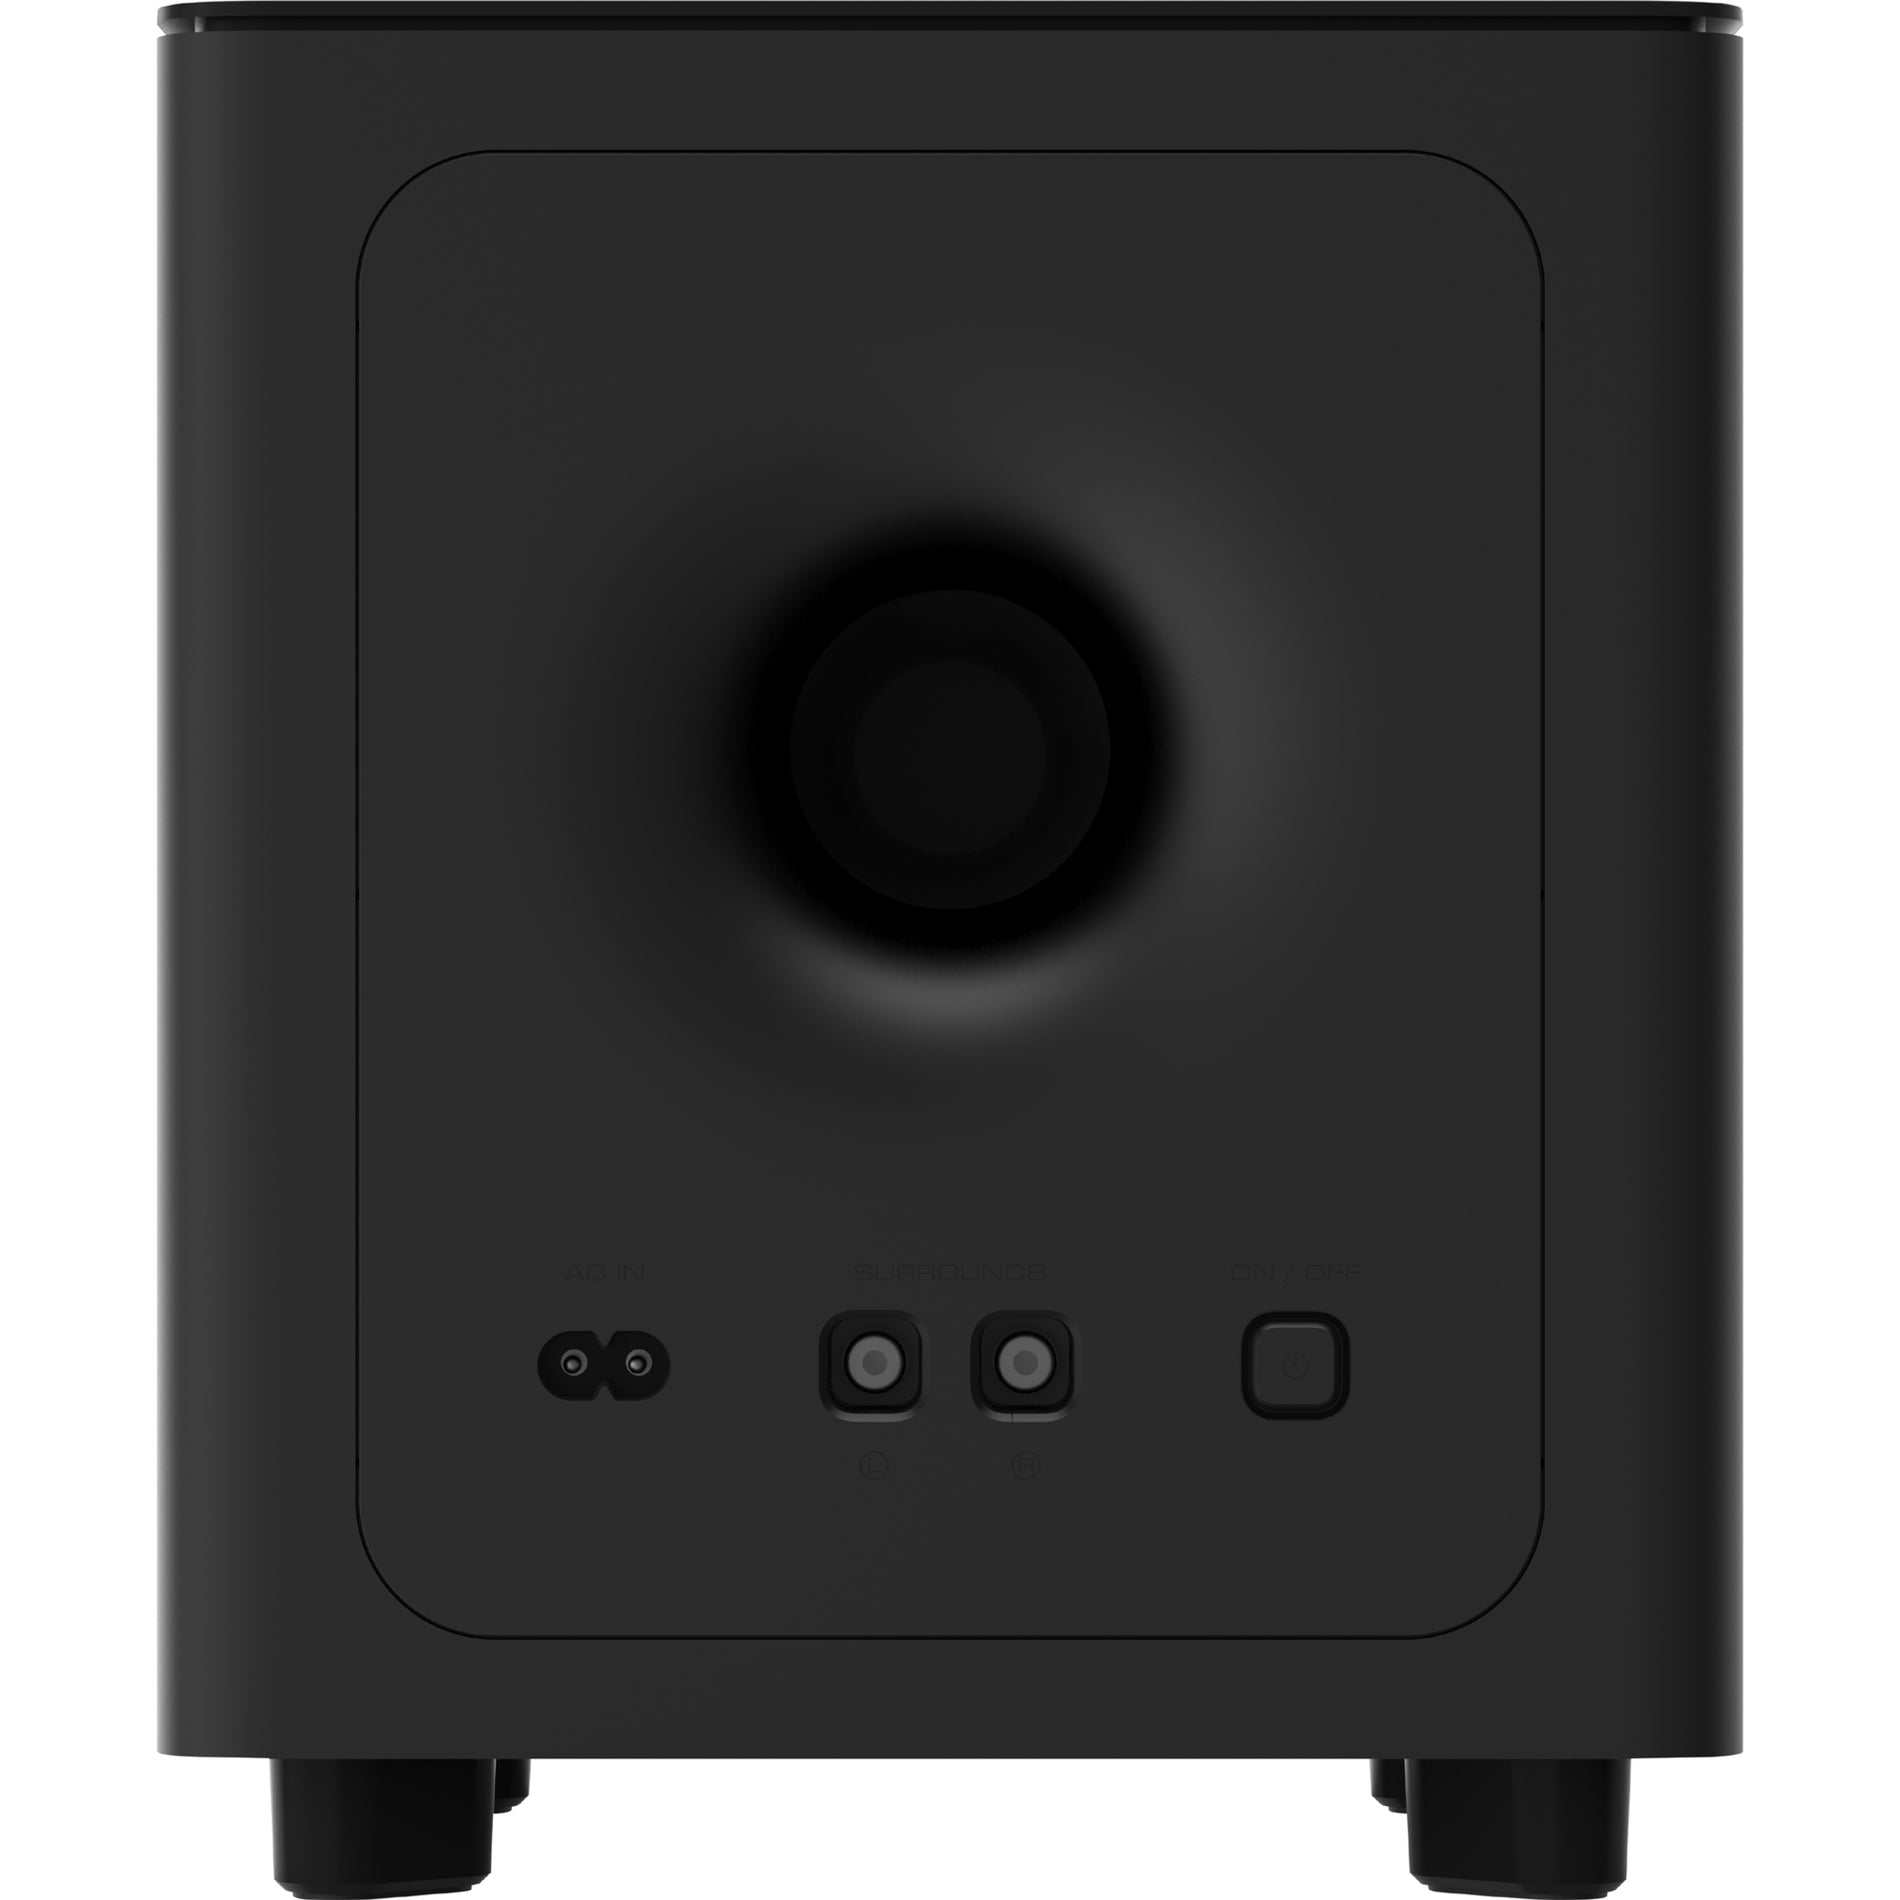 VIZIO V51-H6 V-Series 5.1 Home Theater Sound Bar, Bluetooth Smart Speaker - Alexa, Google Assistant, Siri Supported, Black